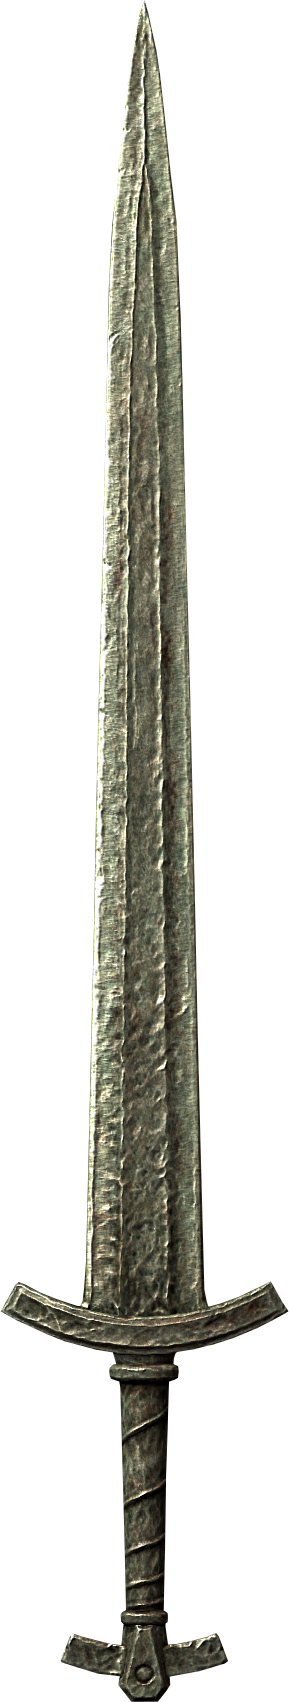 Image - Iron Sword.png - The Elder Scrolls Wiki